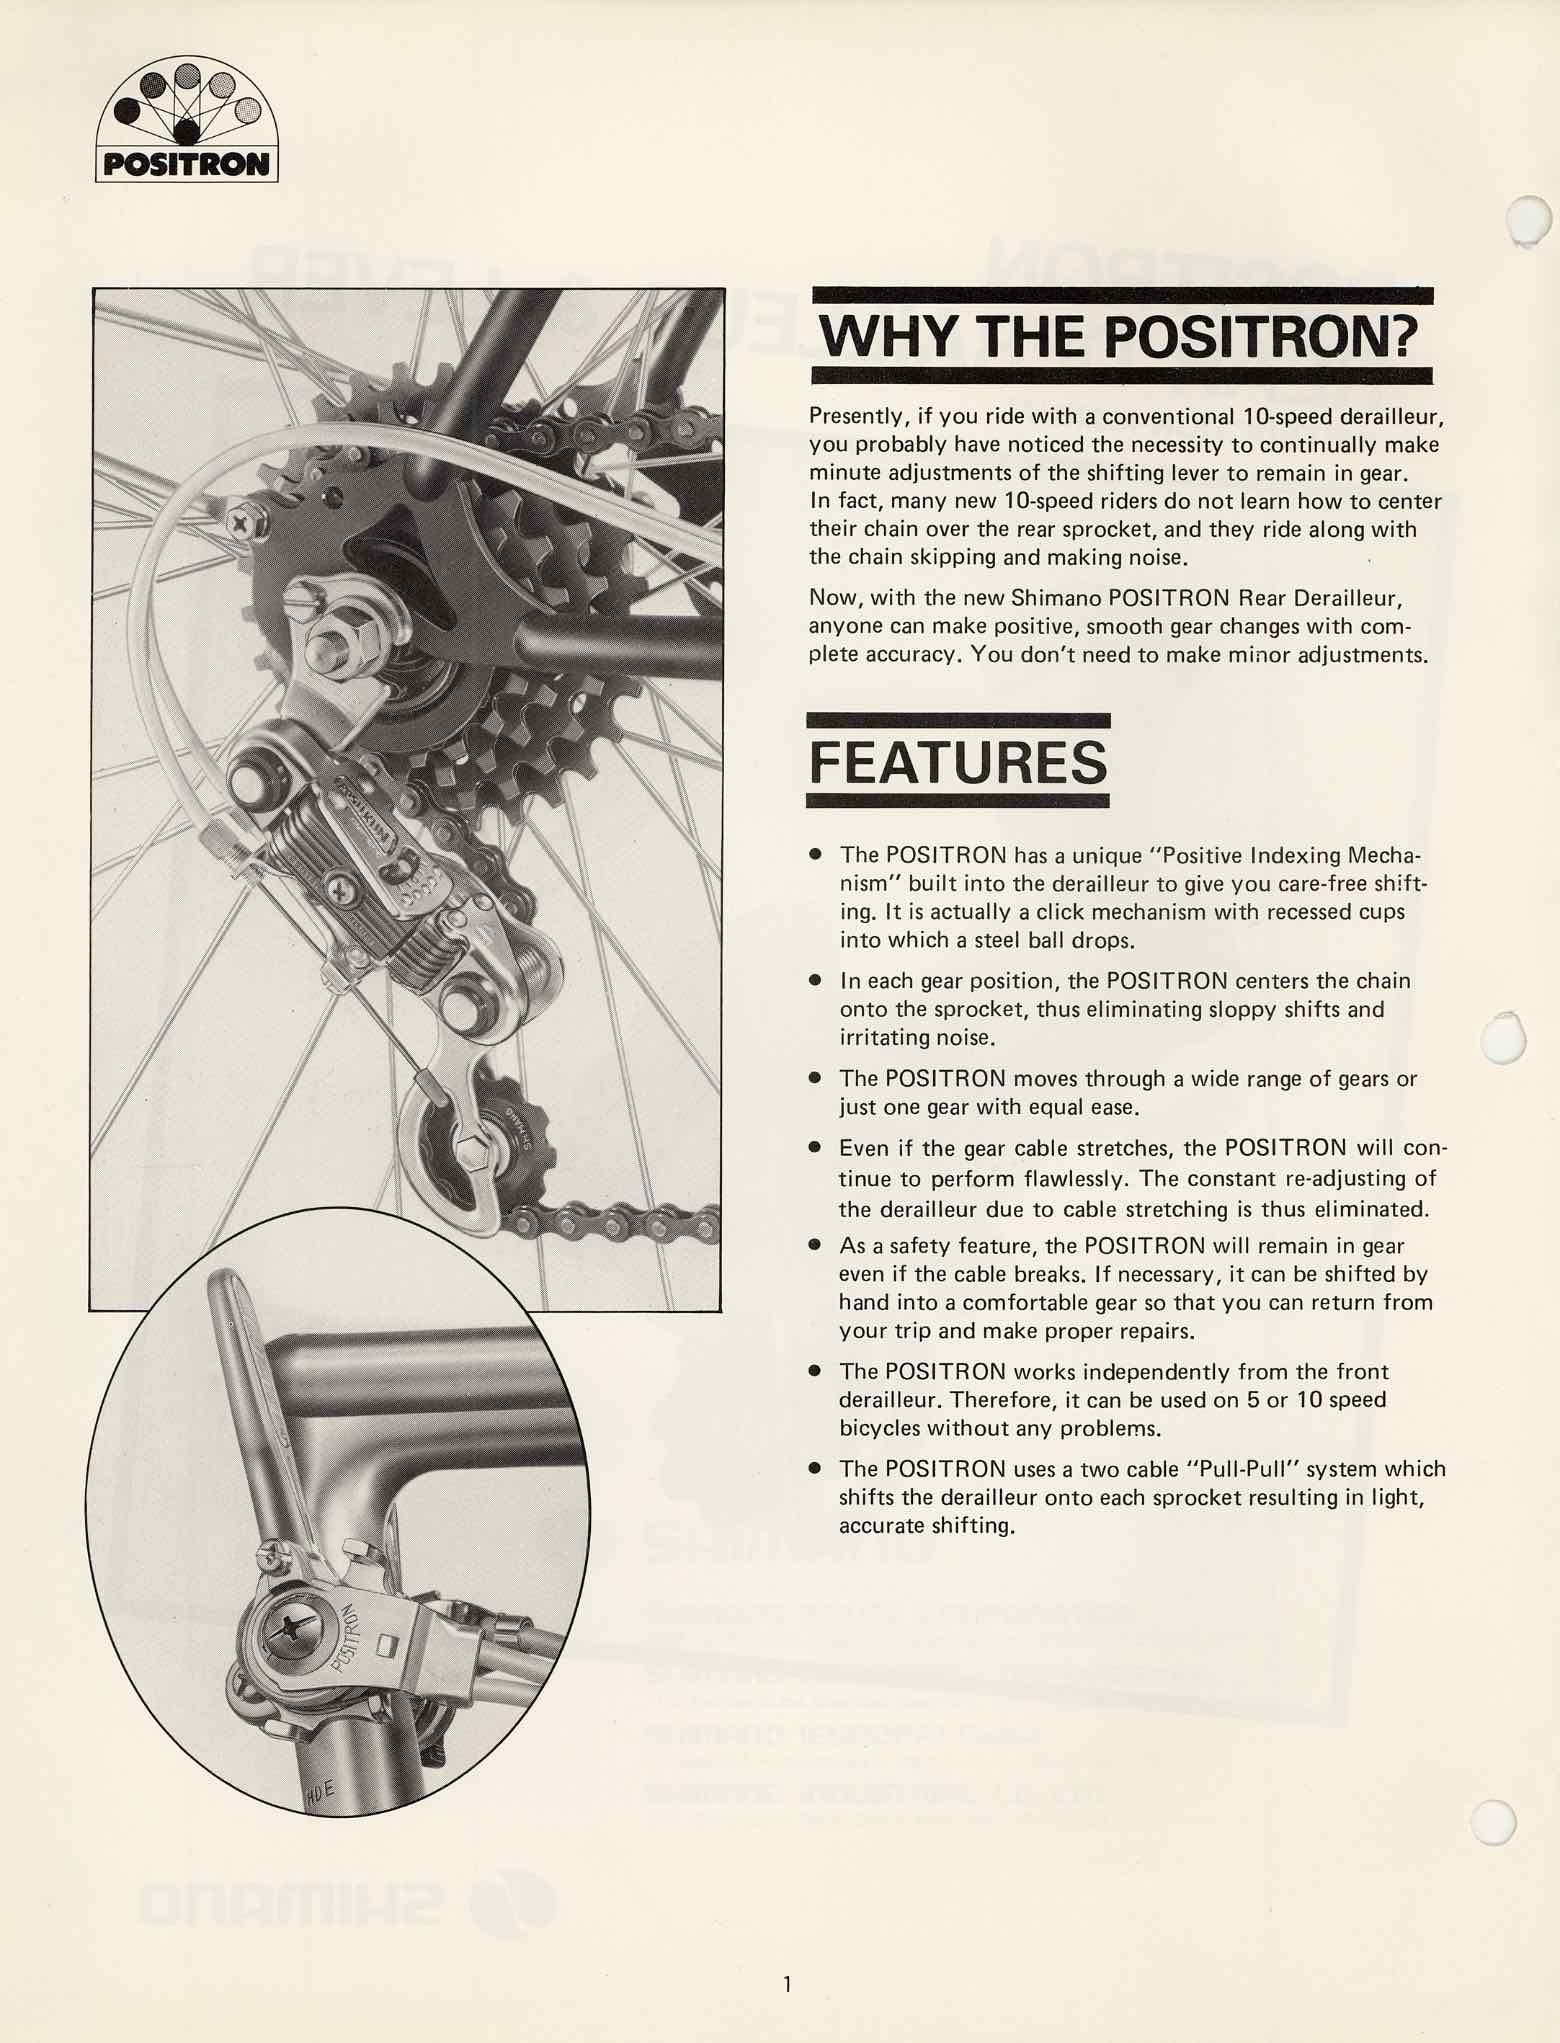 Shimano - Positron instruction manual page 1 main image